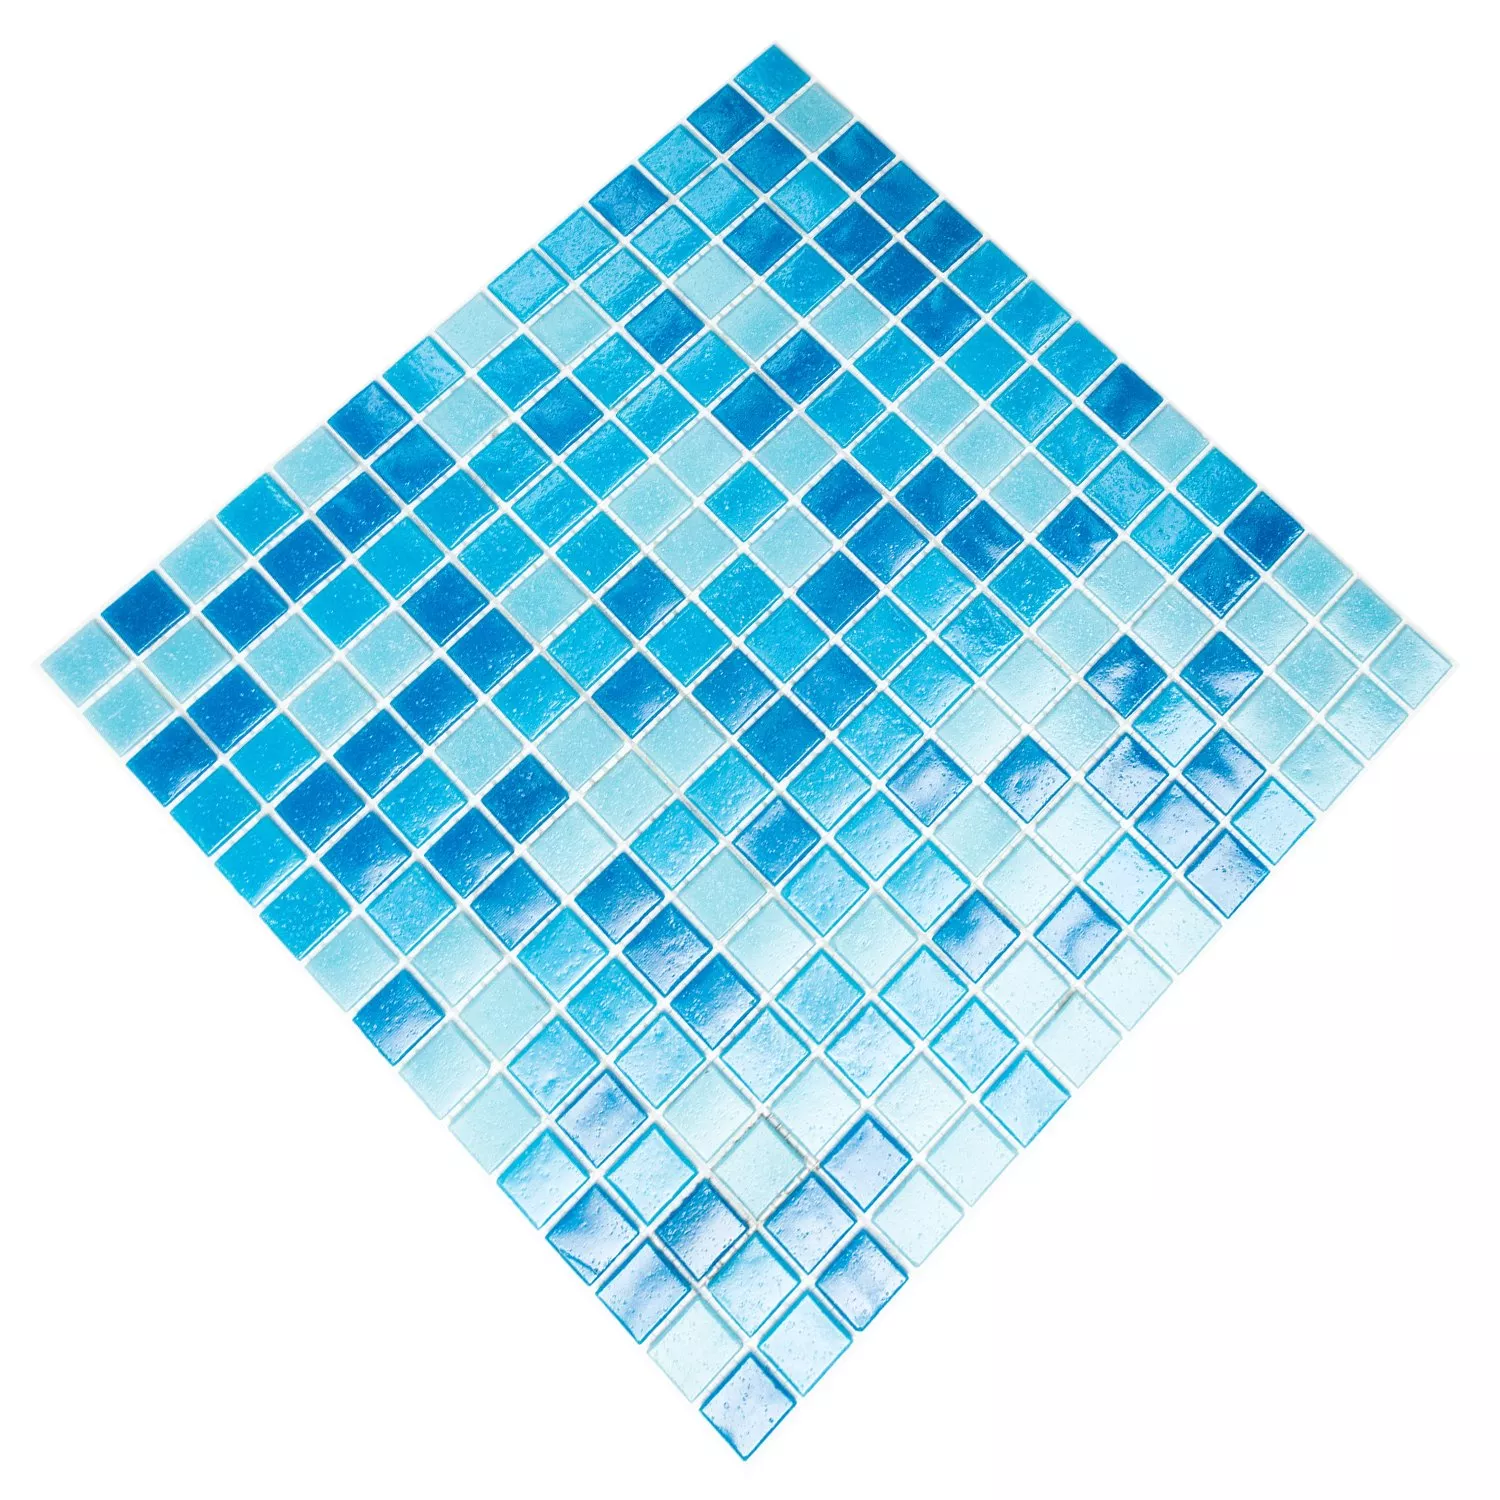 Sample Swimming Pool Mosaic Pazifik Pasted on Paper